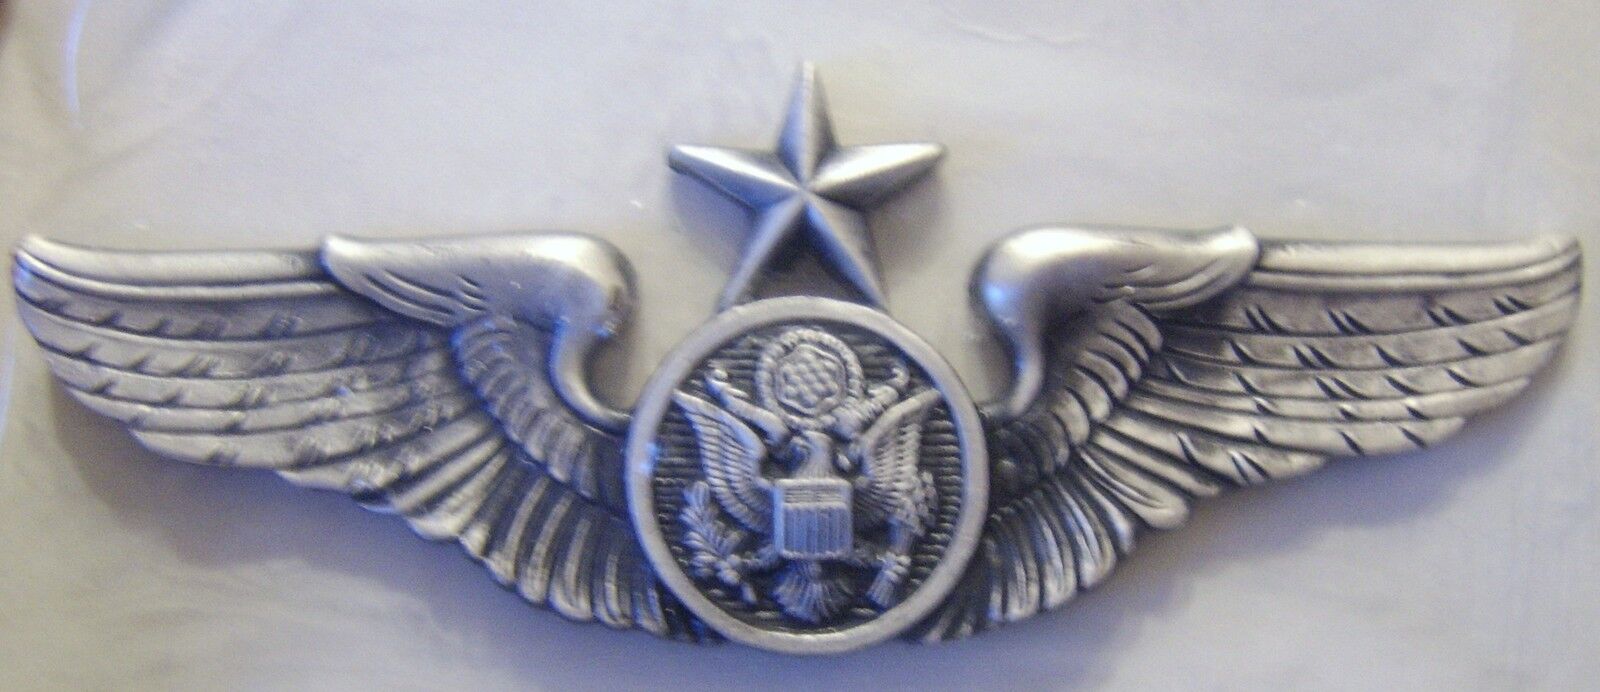 USAF SENIOR AVIATION AIRCREW MEMBER NIP FULL SIZE